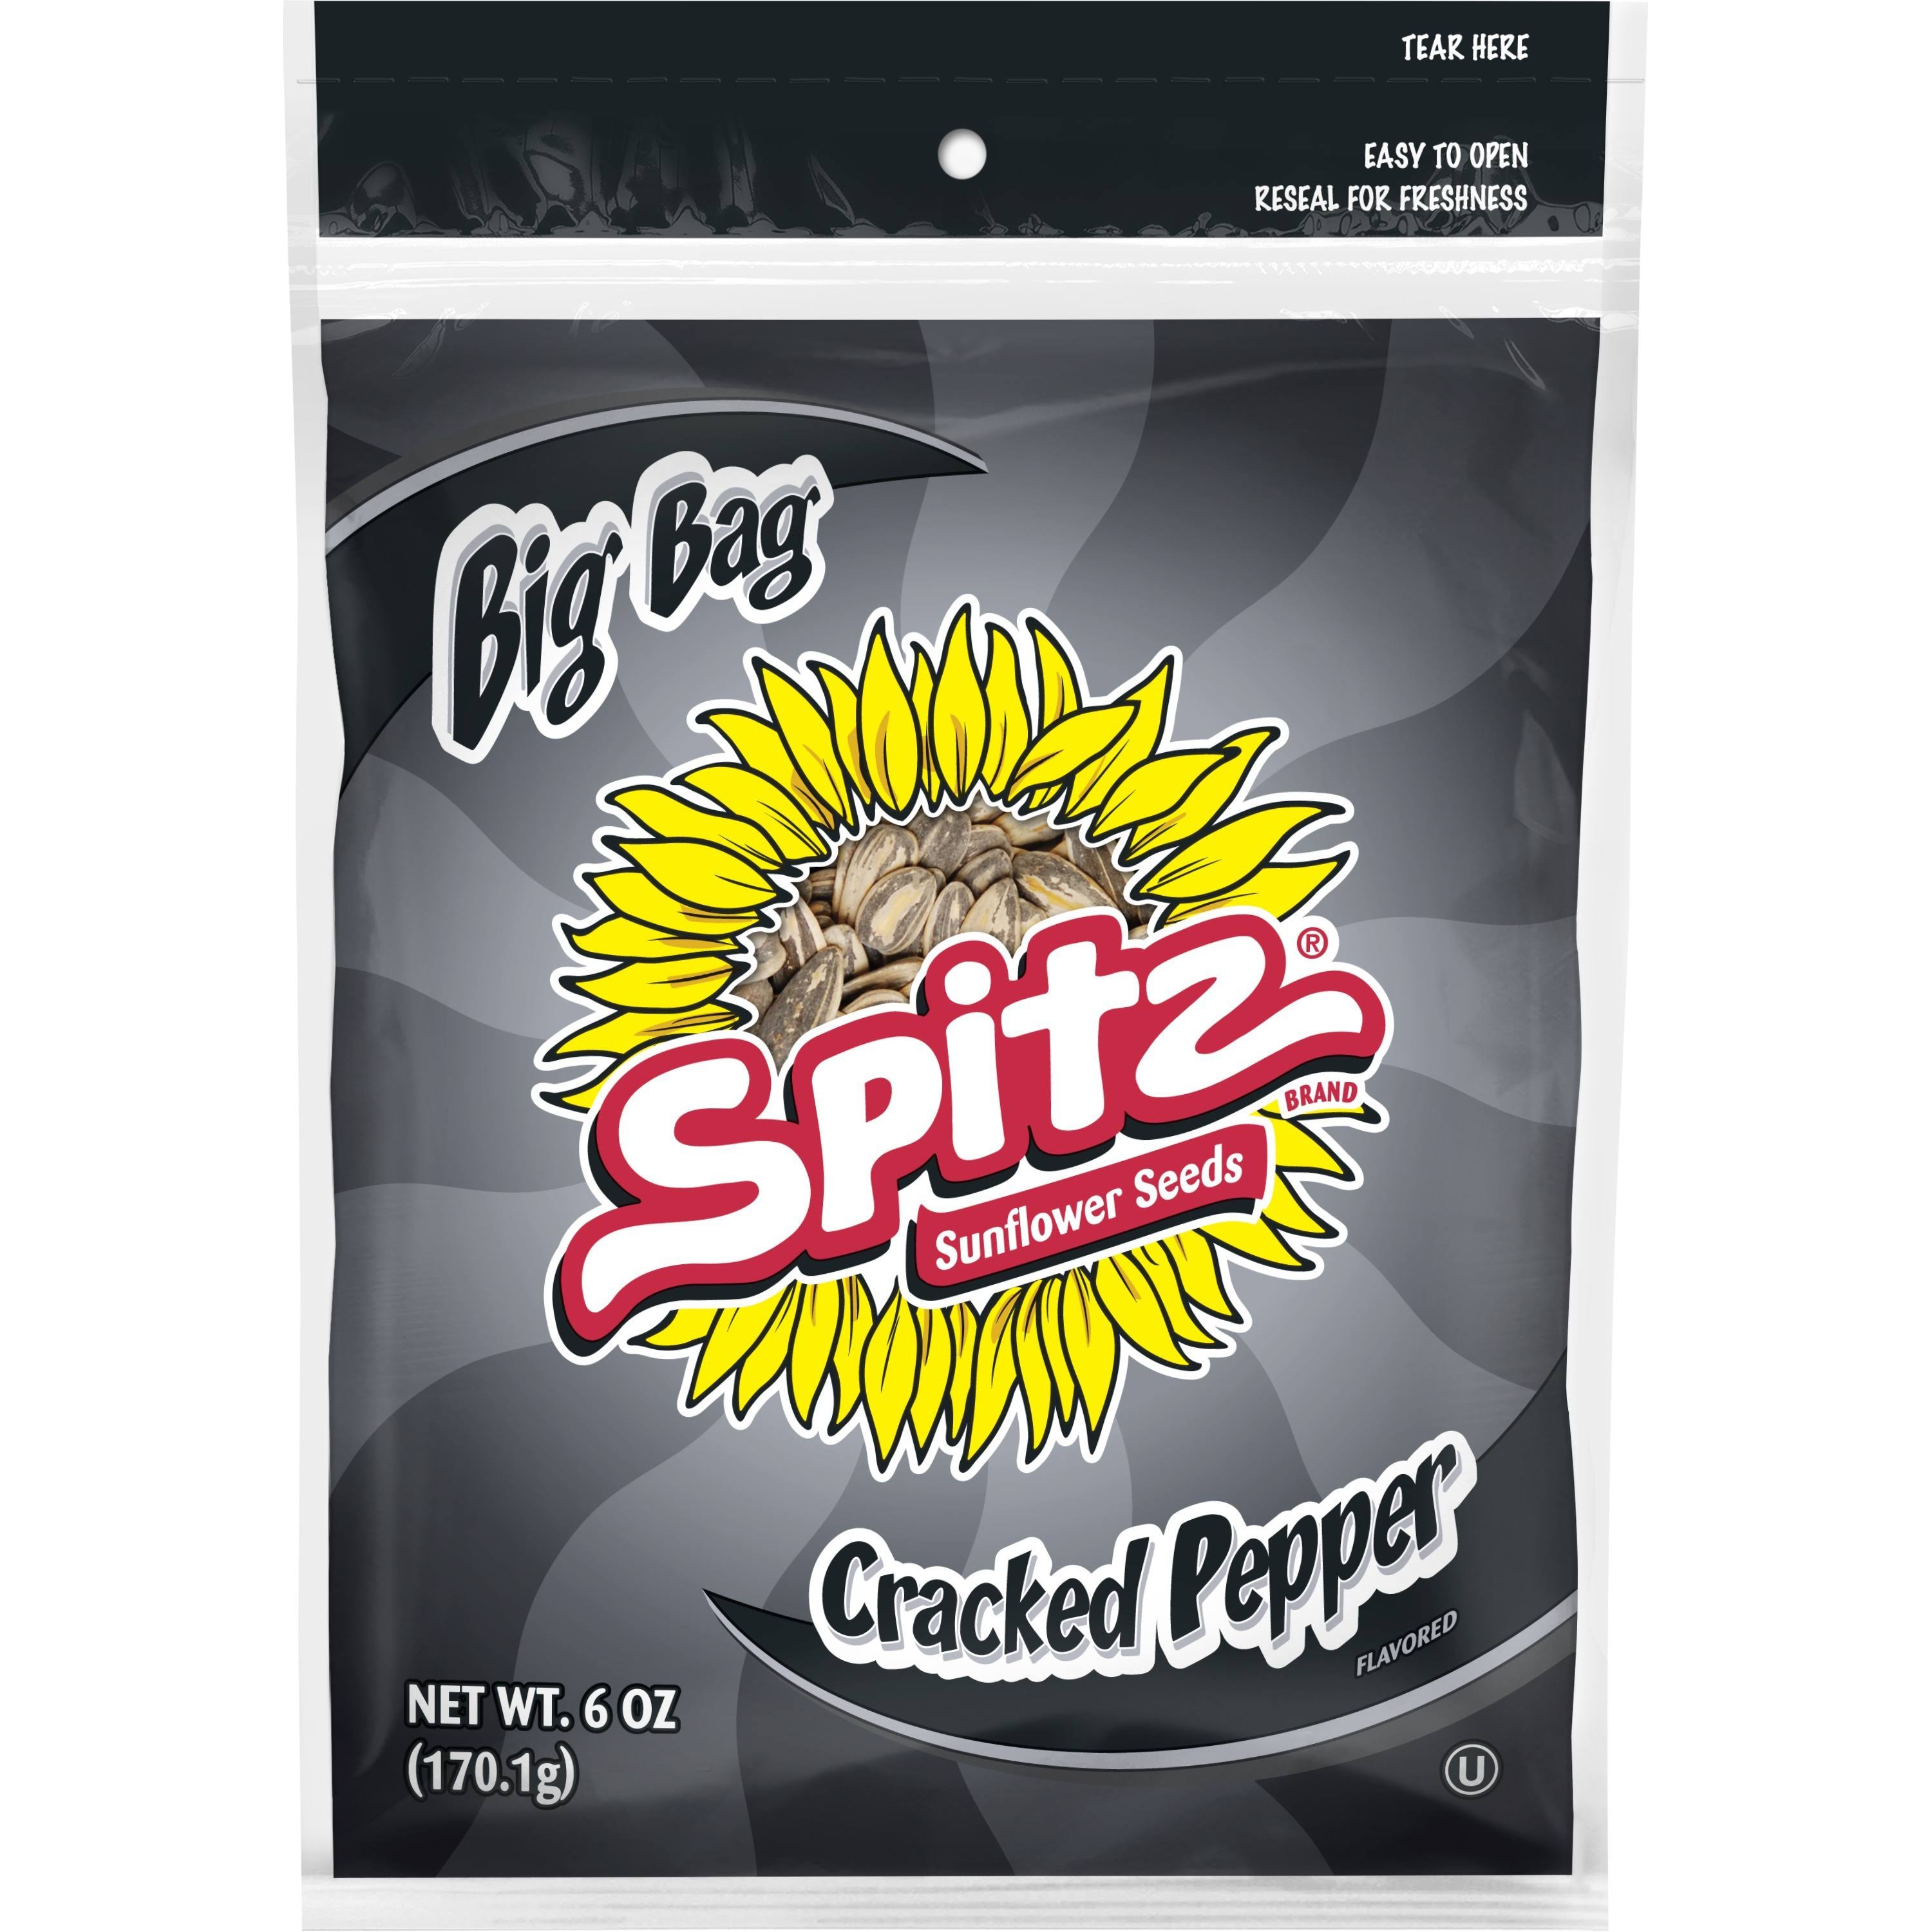 Spitz Sunflower Seeds - Cracked Pepper, 6 oz